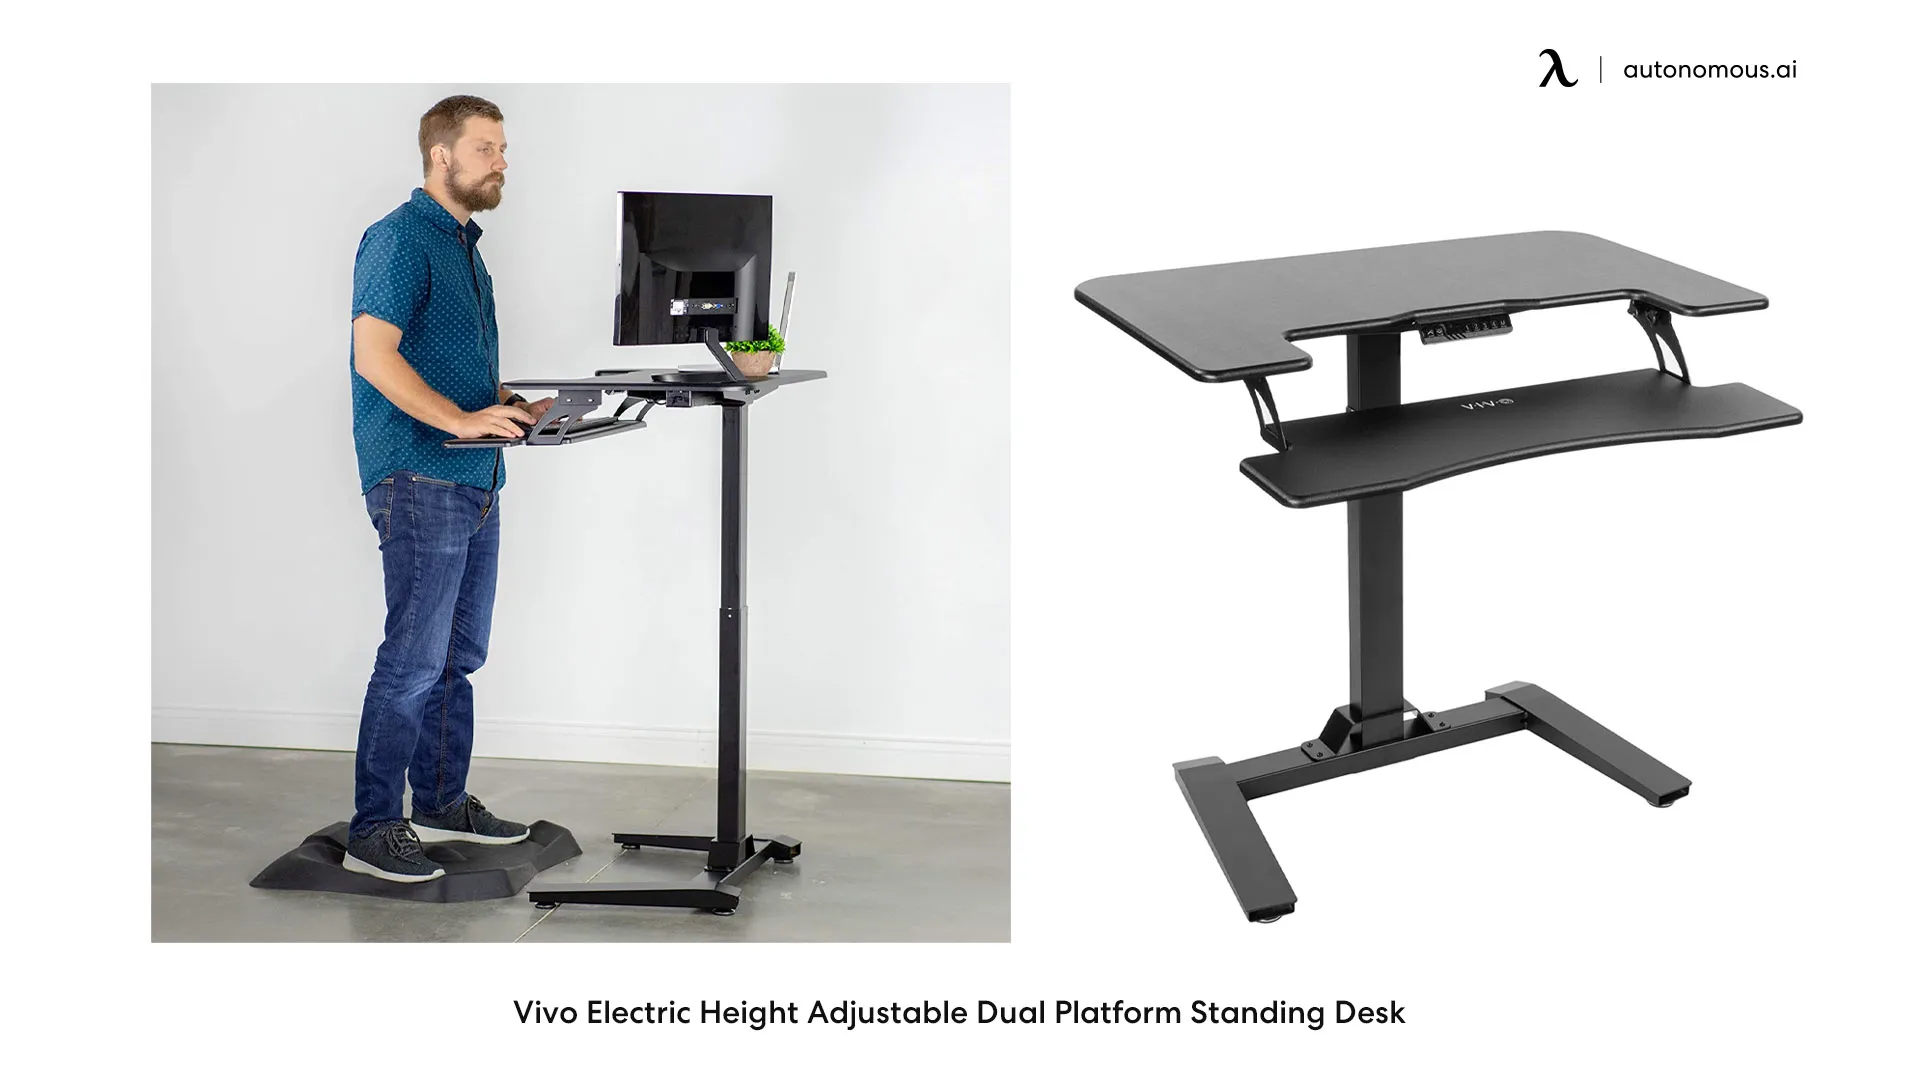 VIVO Electric Mobile Height Adjustable Dual Platform Standing Desk